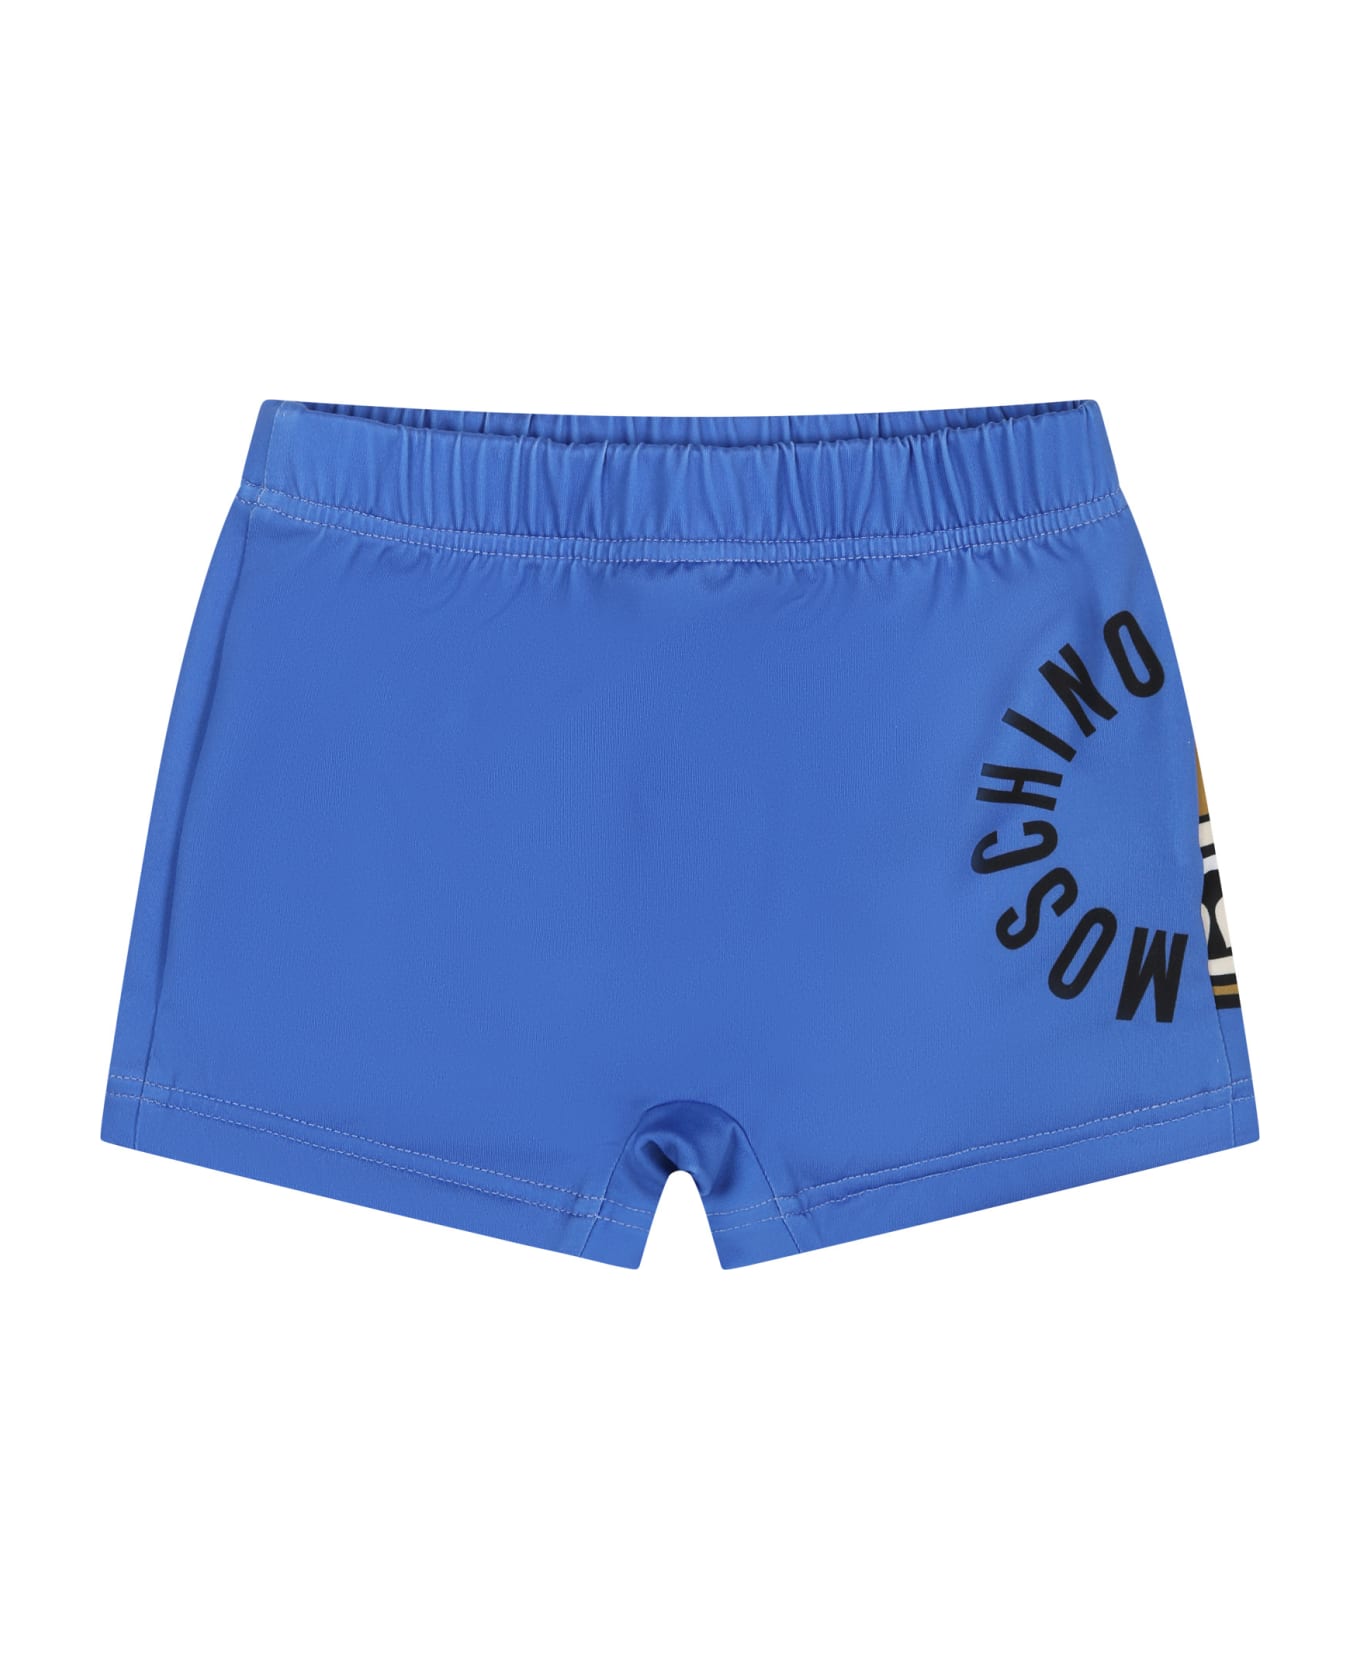 Moschino Light Blue Swim Shorts For Baby Boy With Teddy Bear And Logo - Light Blue 水着